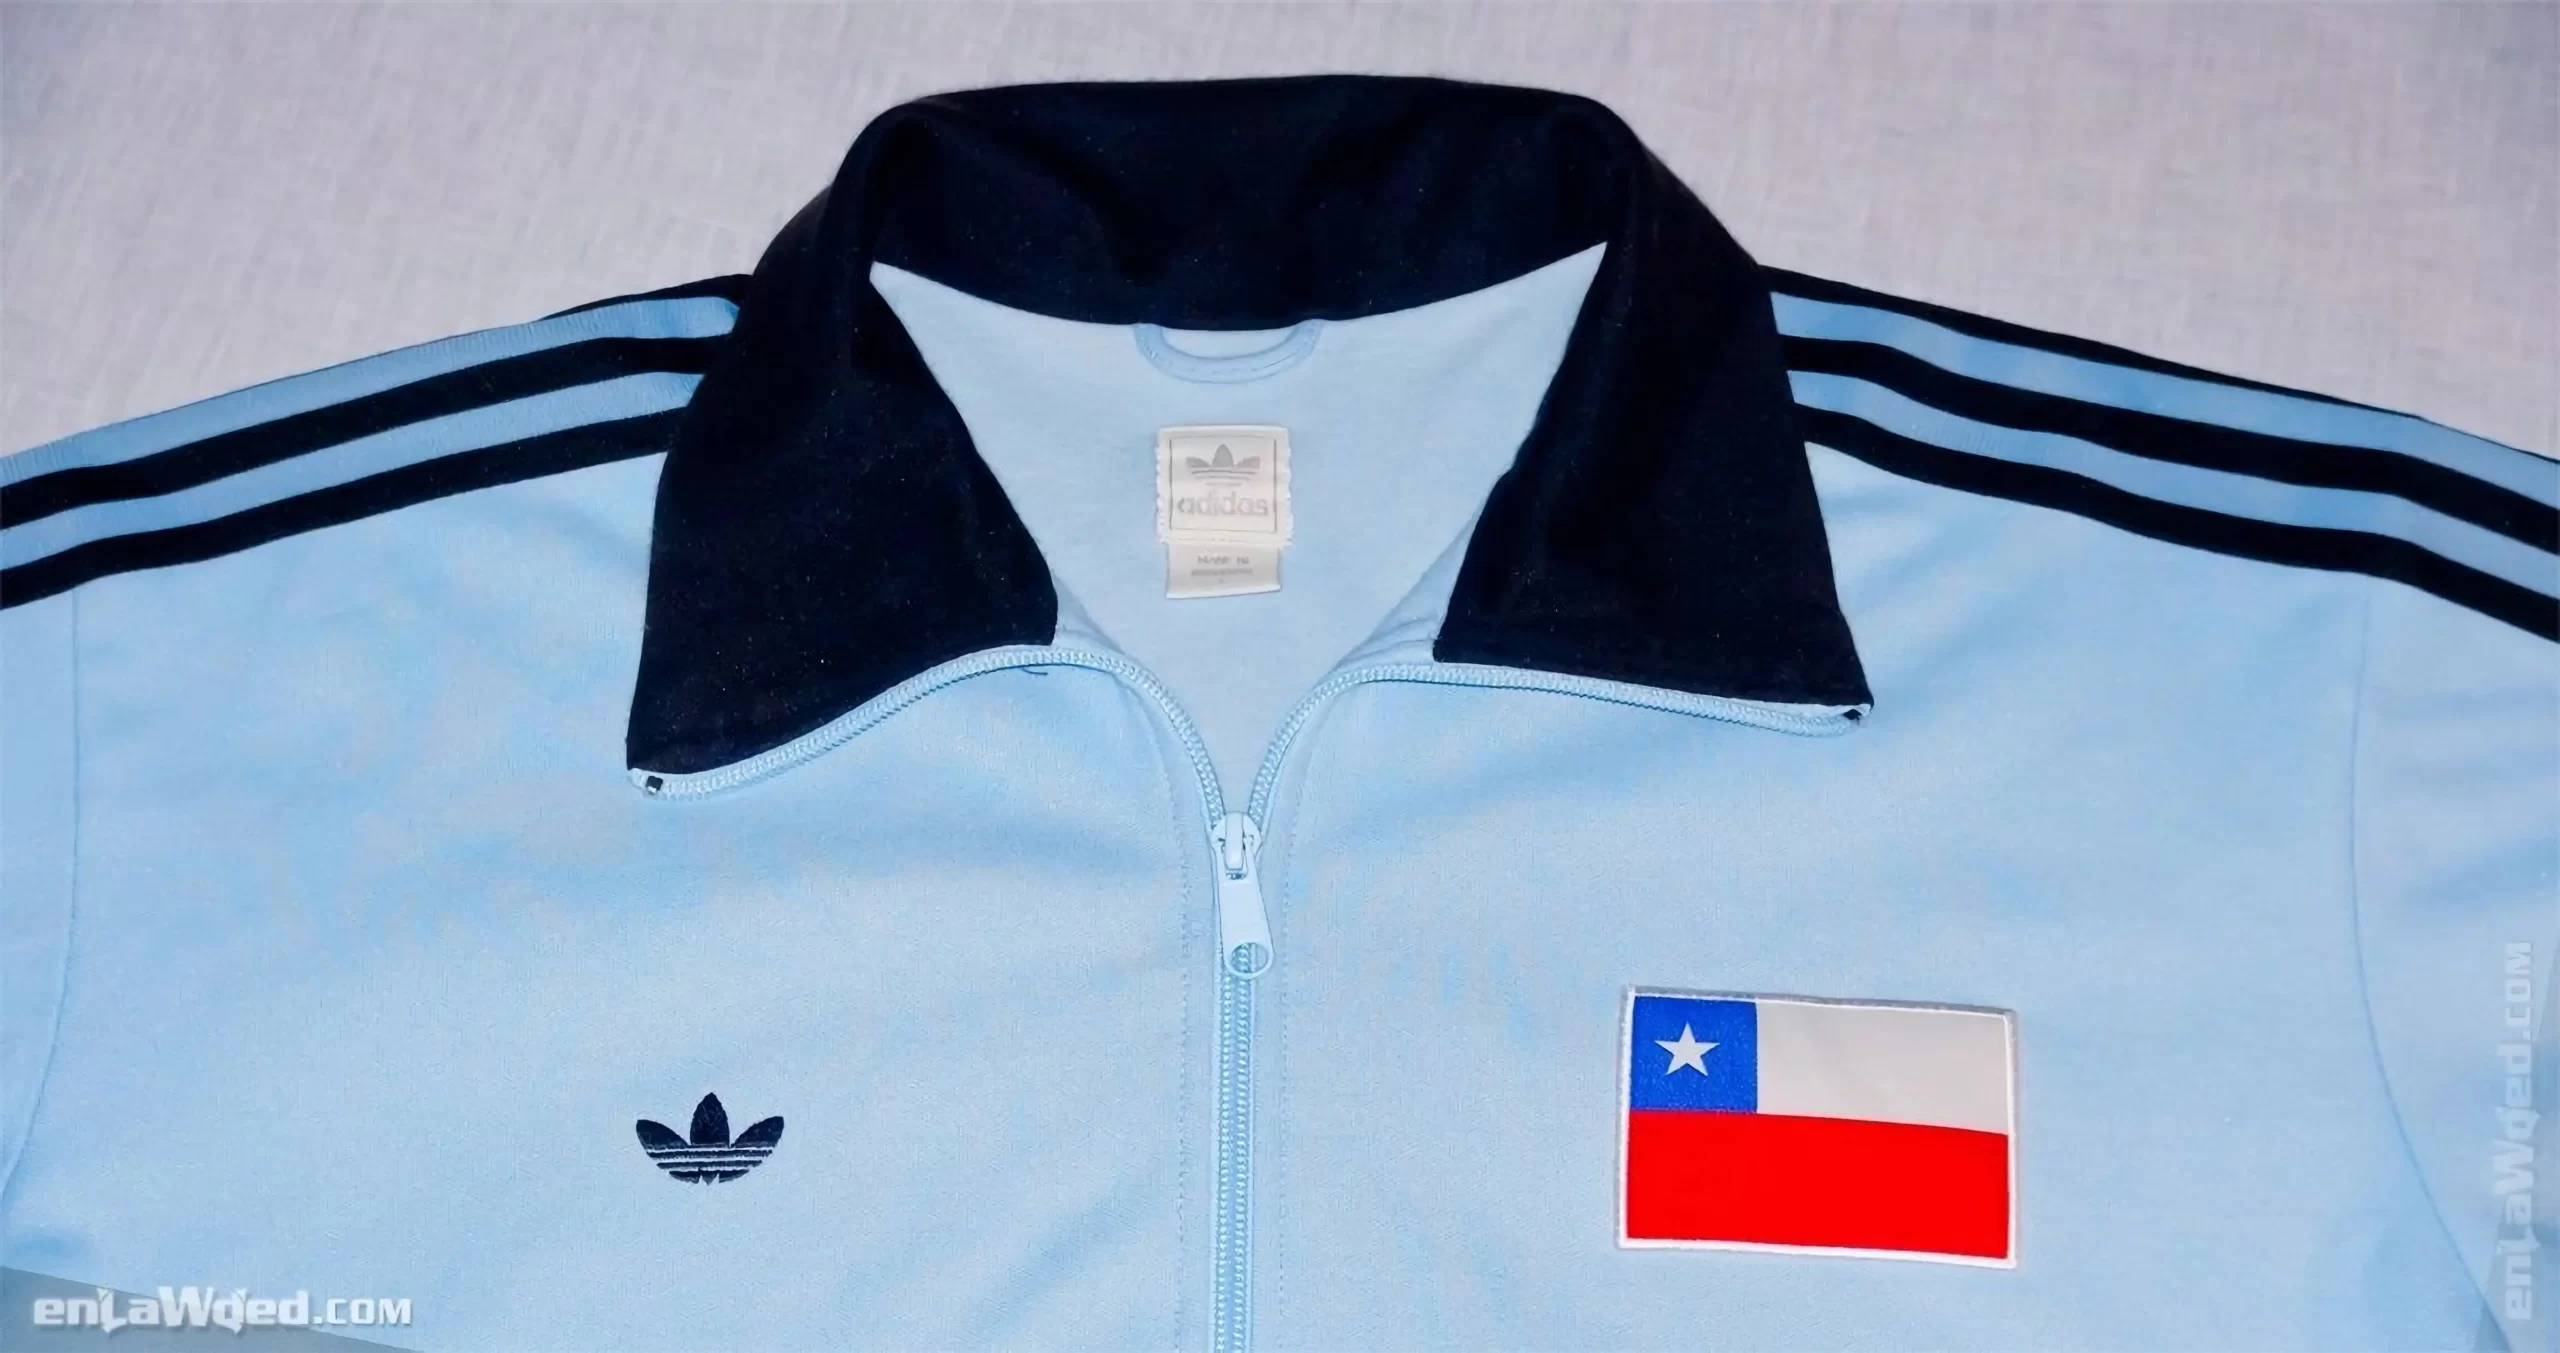 Men’s 2003 Chile ’82 Soto TT by Adidas Originals: Fascinating (EnLawded.com file #lmc4i05h7g3dvts971w)